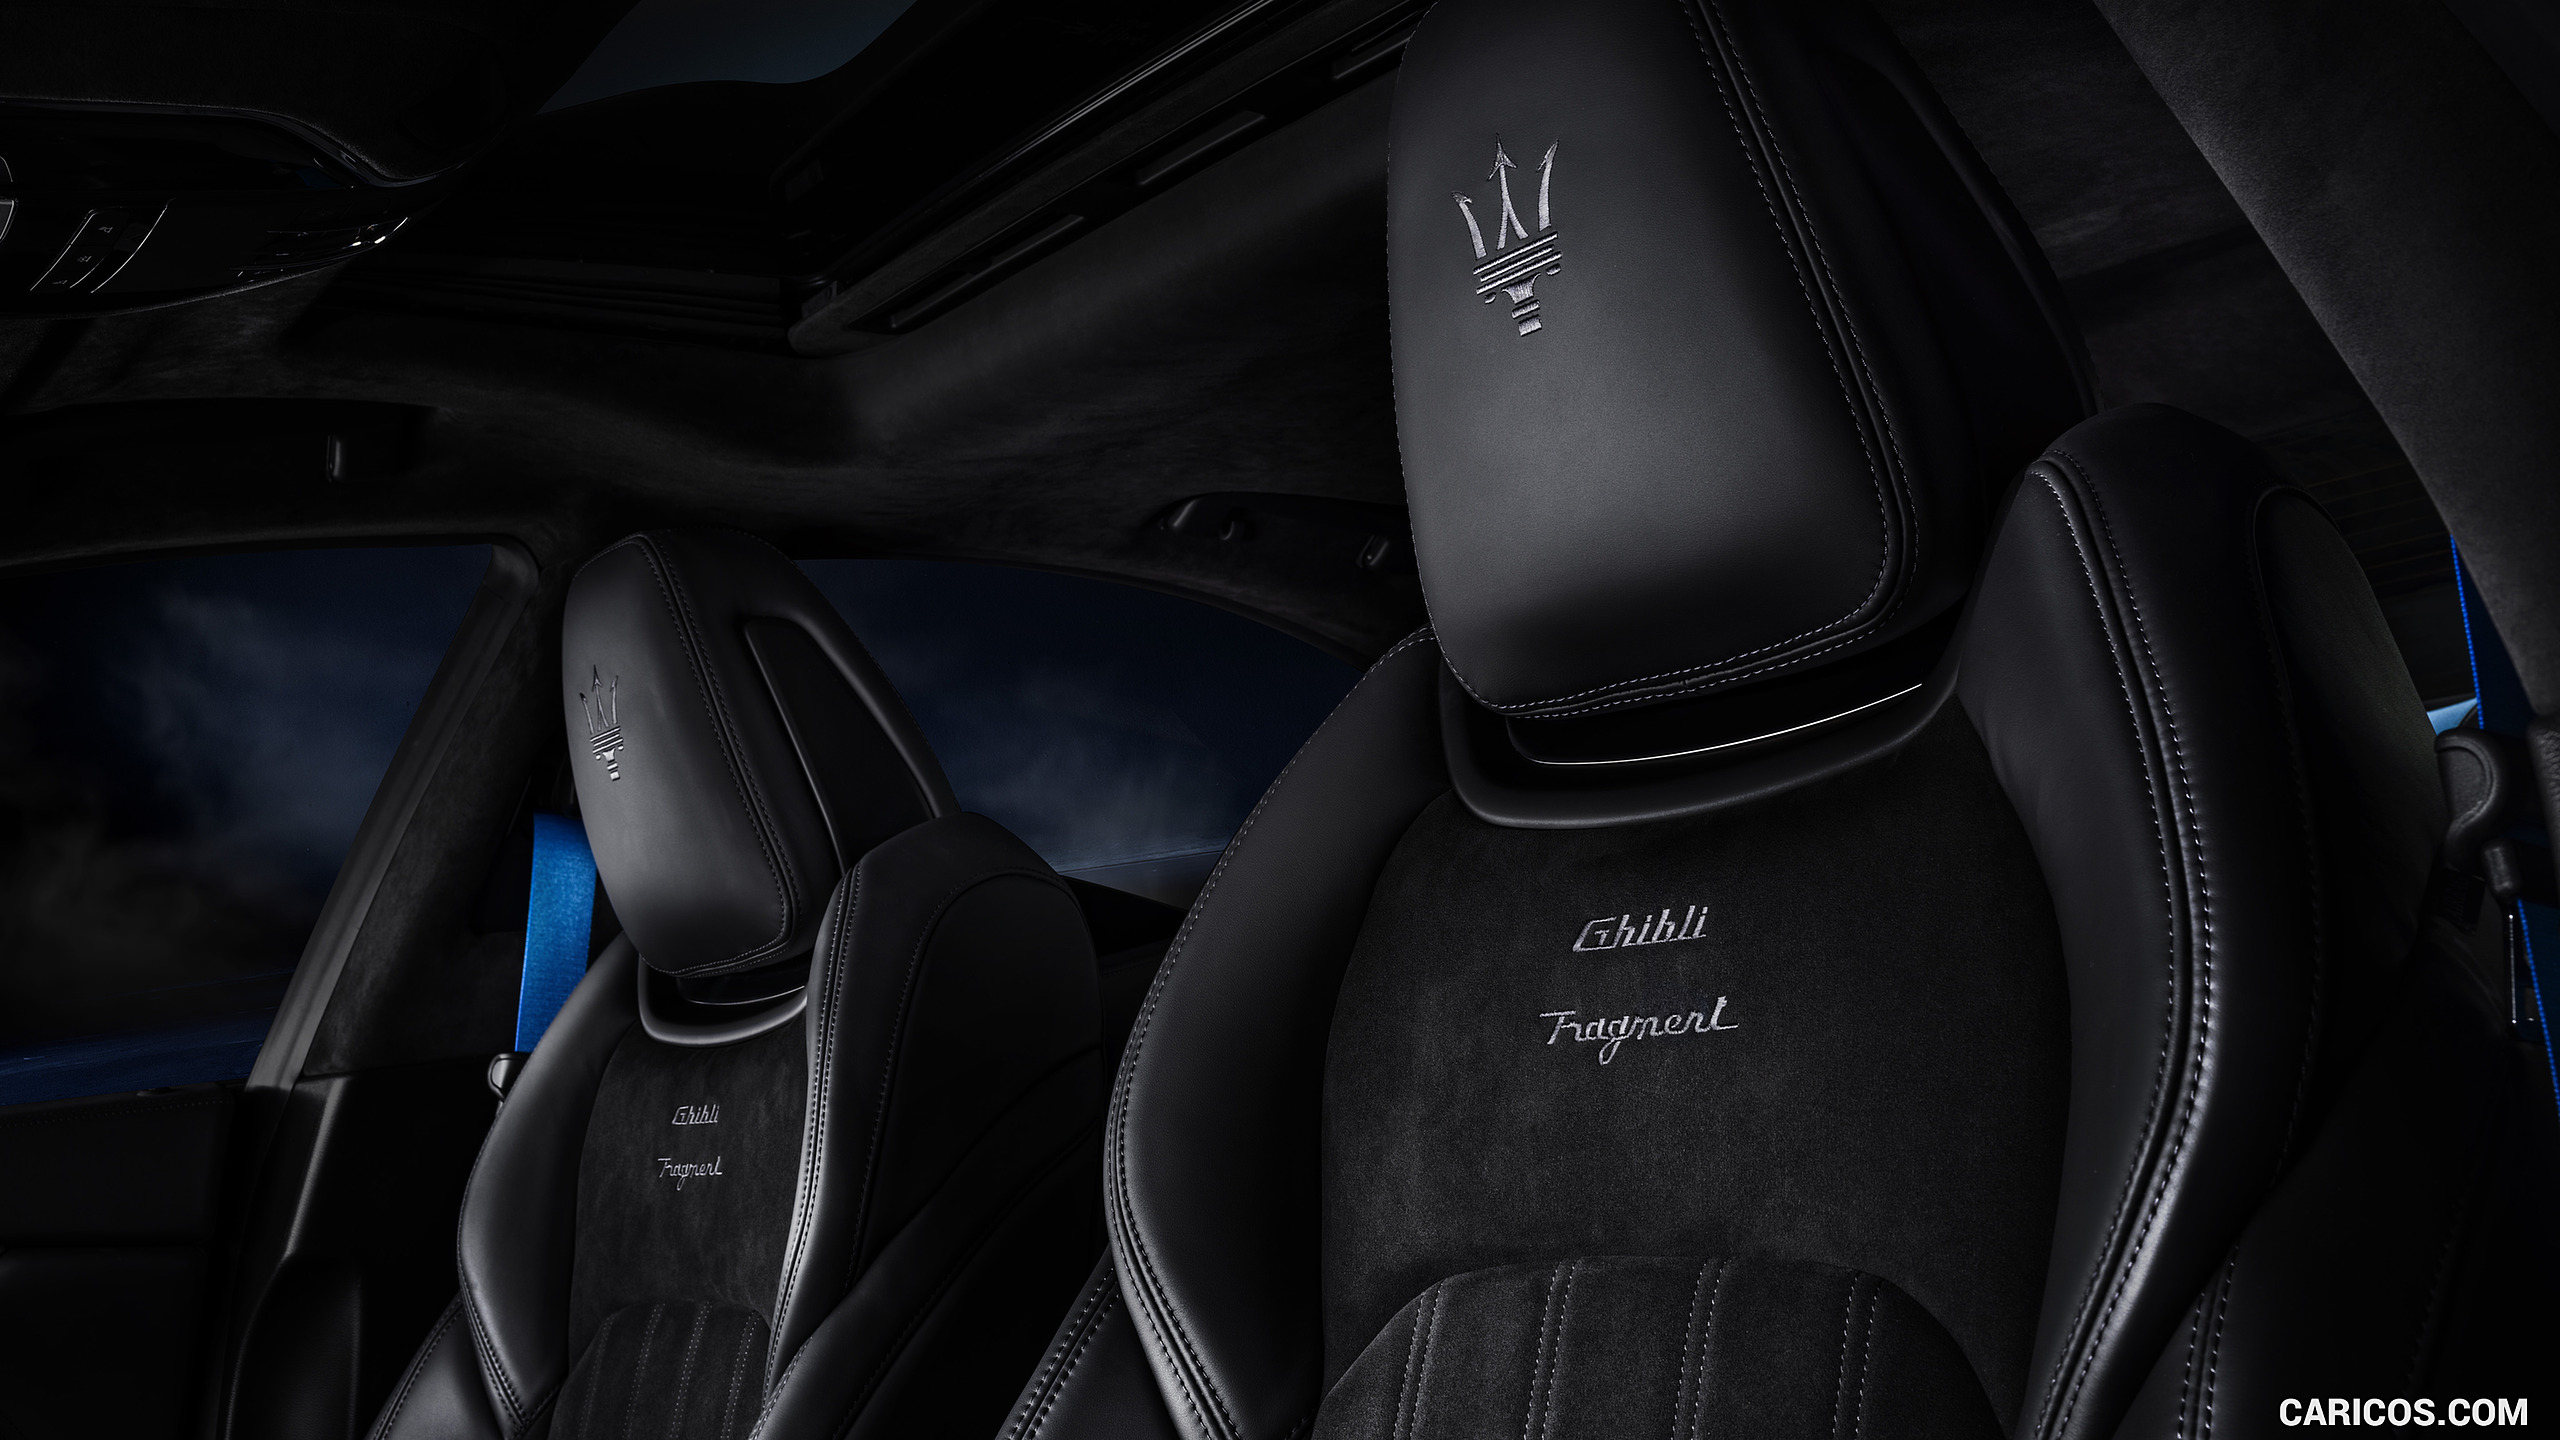 2022 Maserati Ghibli Fragment Special Edition - Interior, Seats, #11 of 12